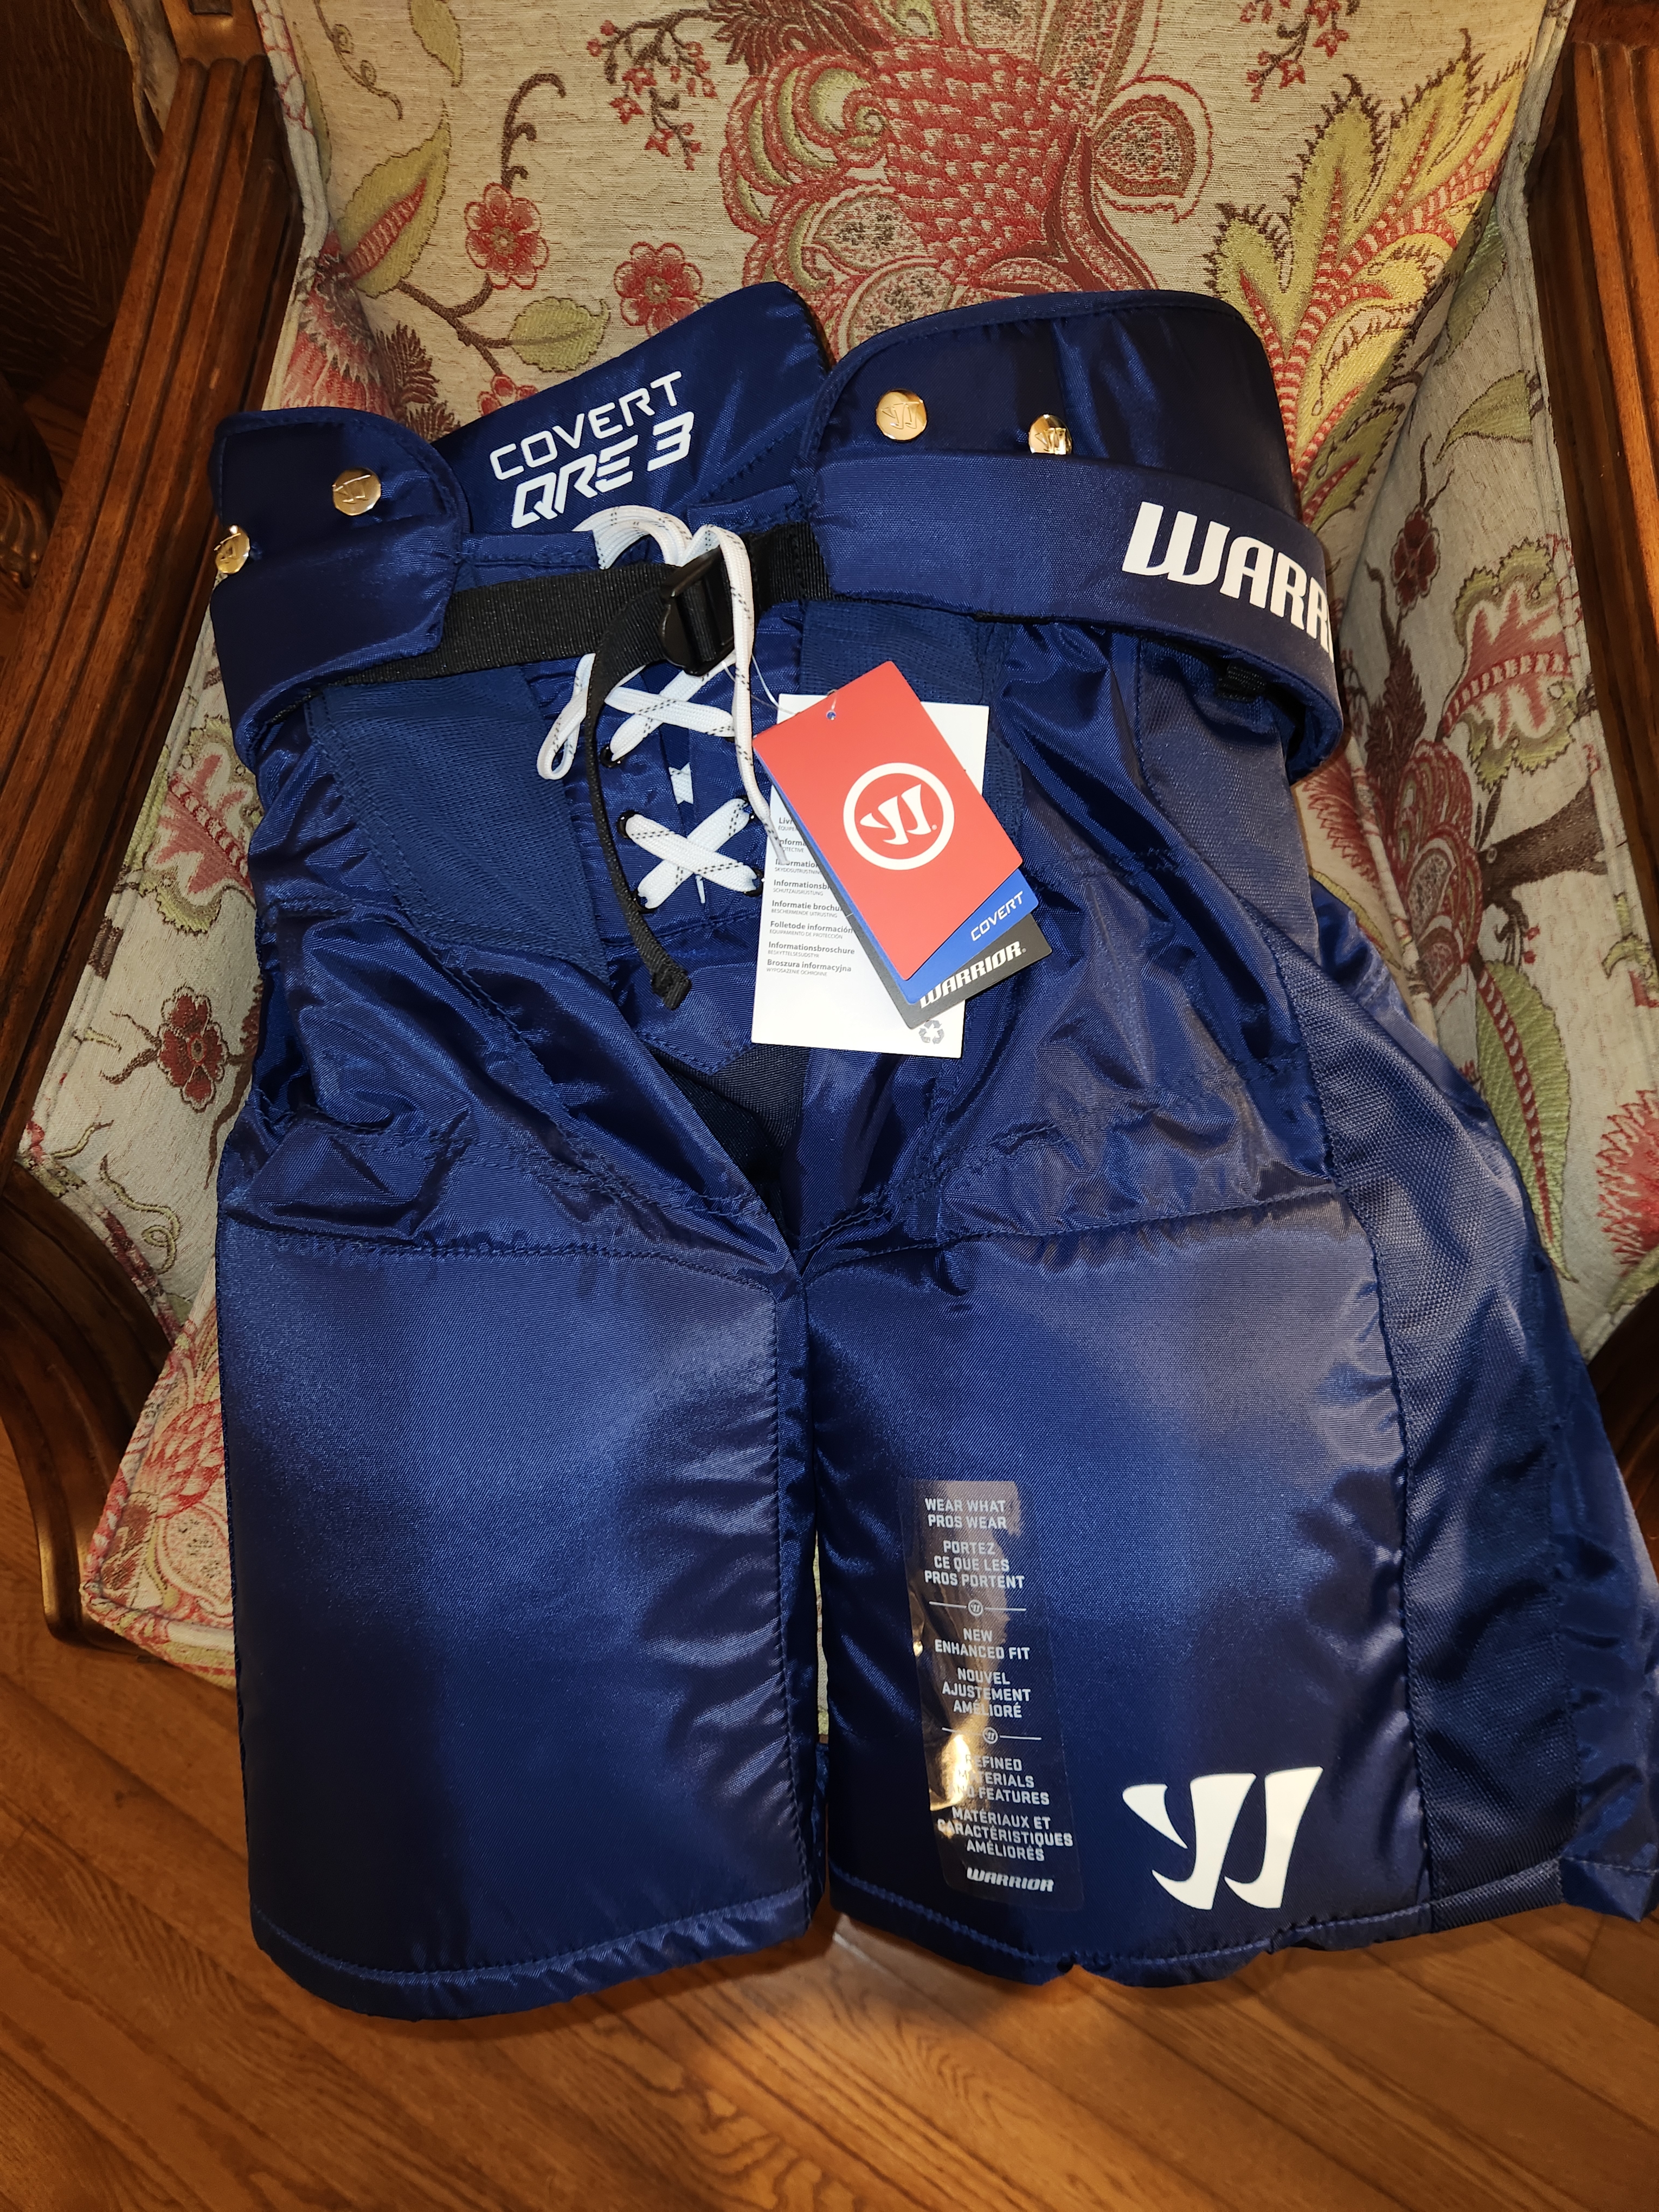 Senior New Medium Warrior Covert QRE 3 Hockey Pants